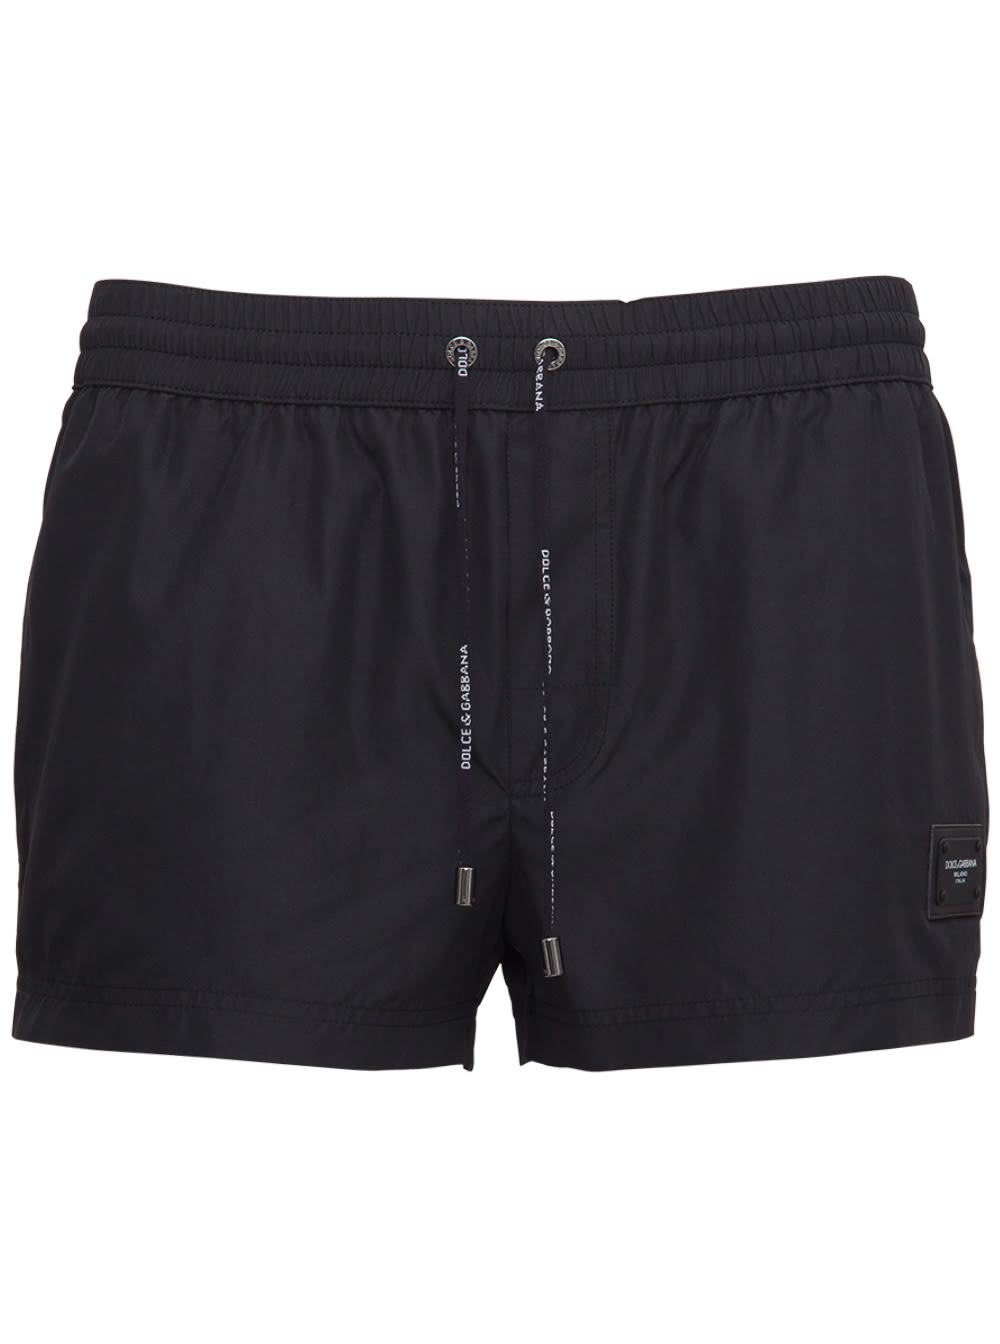 Dolce & Gabbana Black Nylon Swim Shorts With Logo